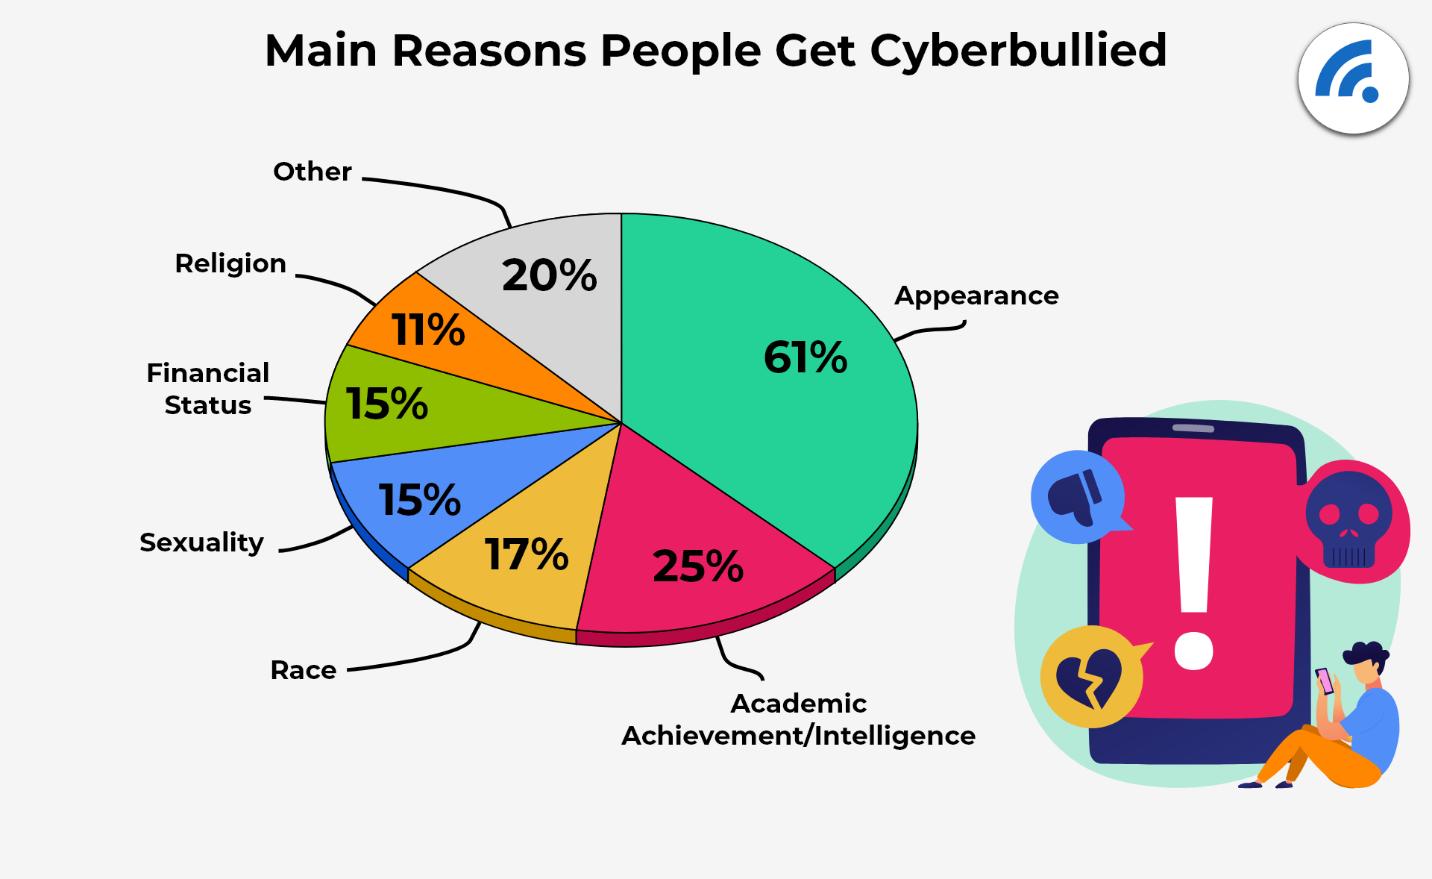 presentation analysis and interpretation of data about cyberbullying